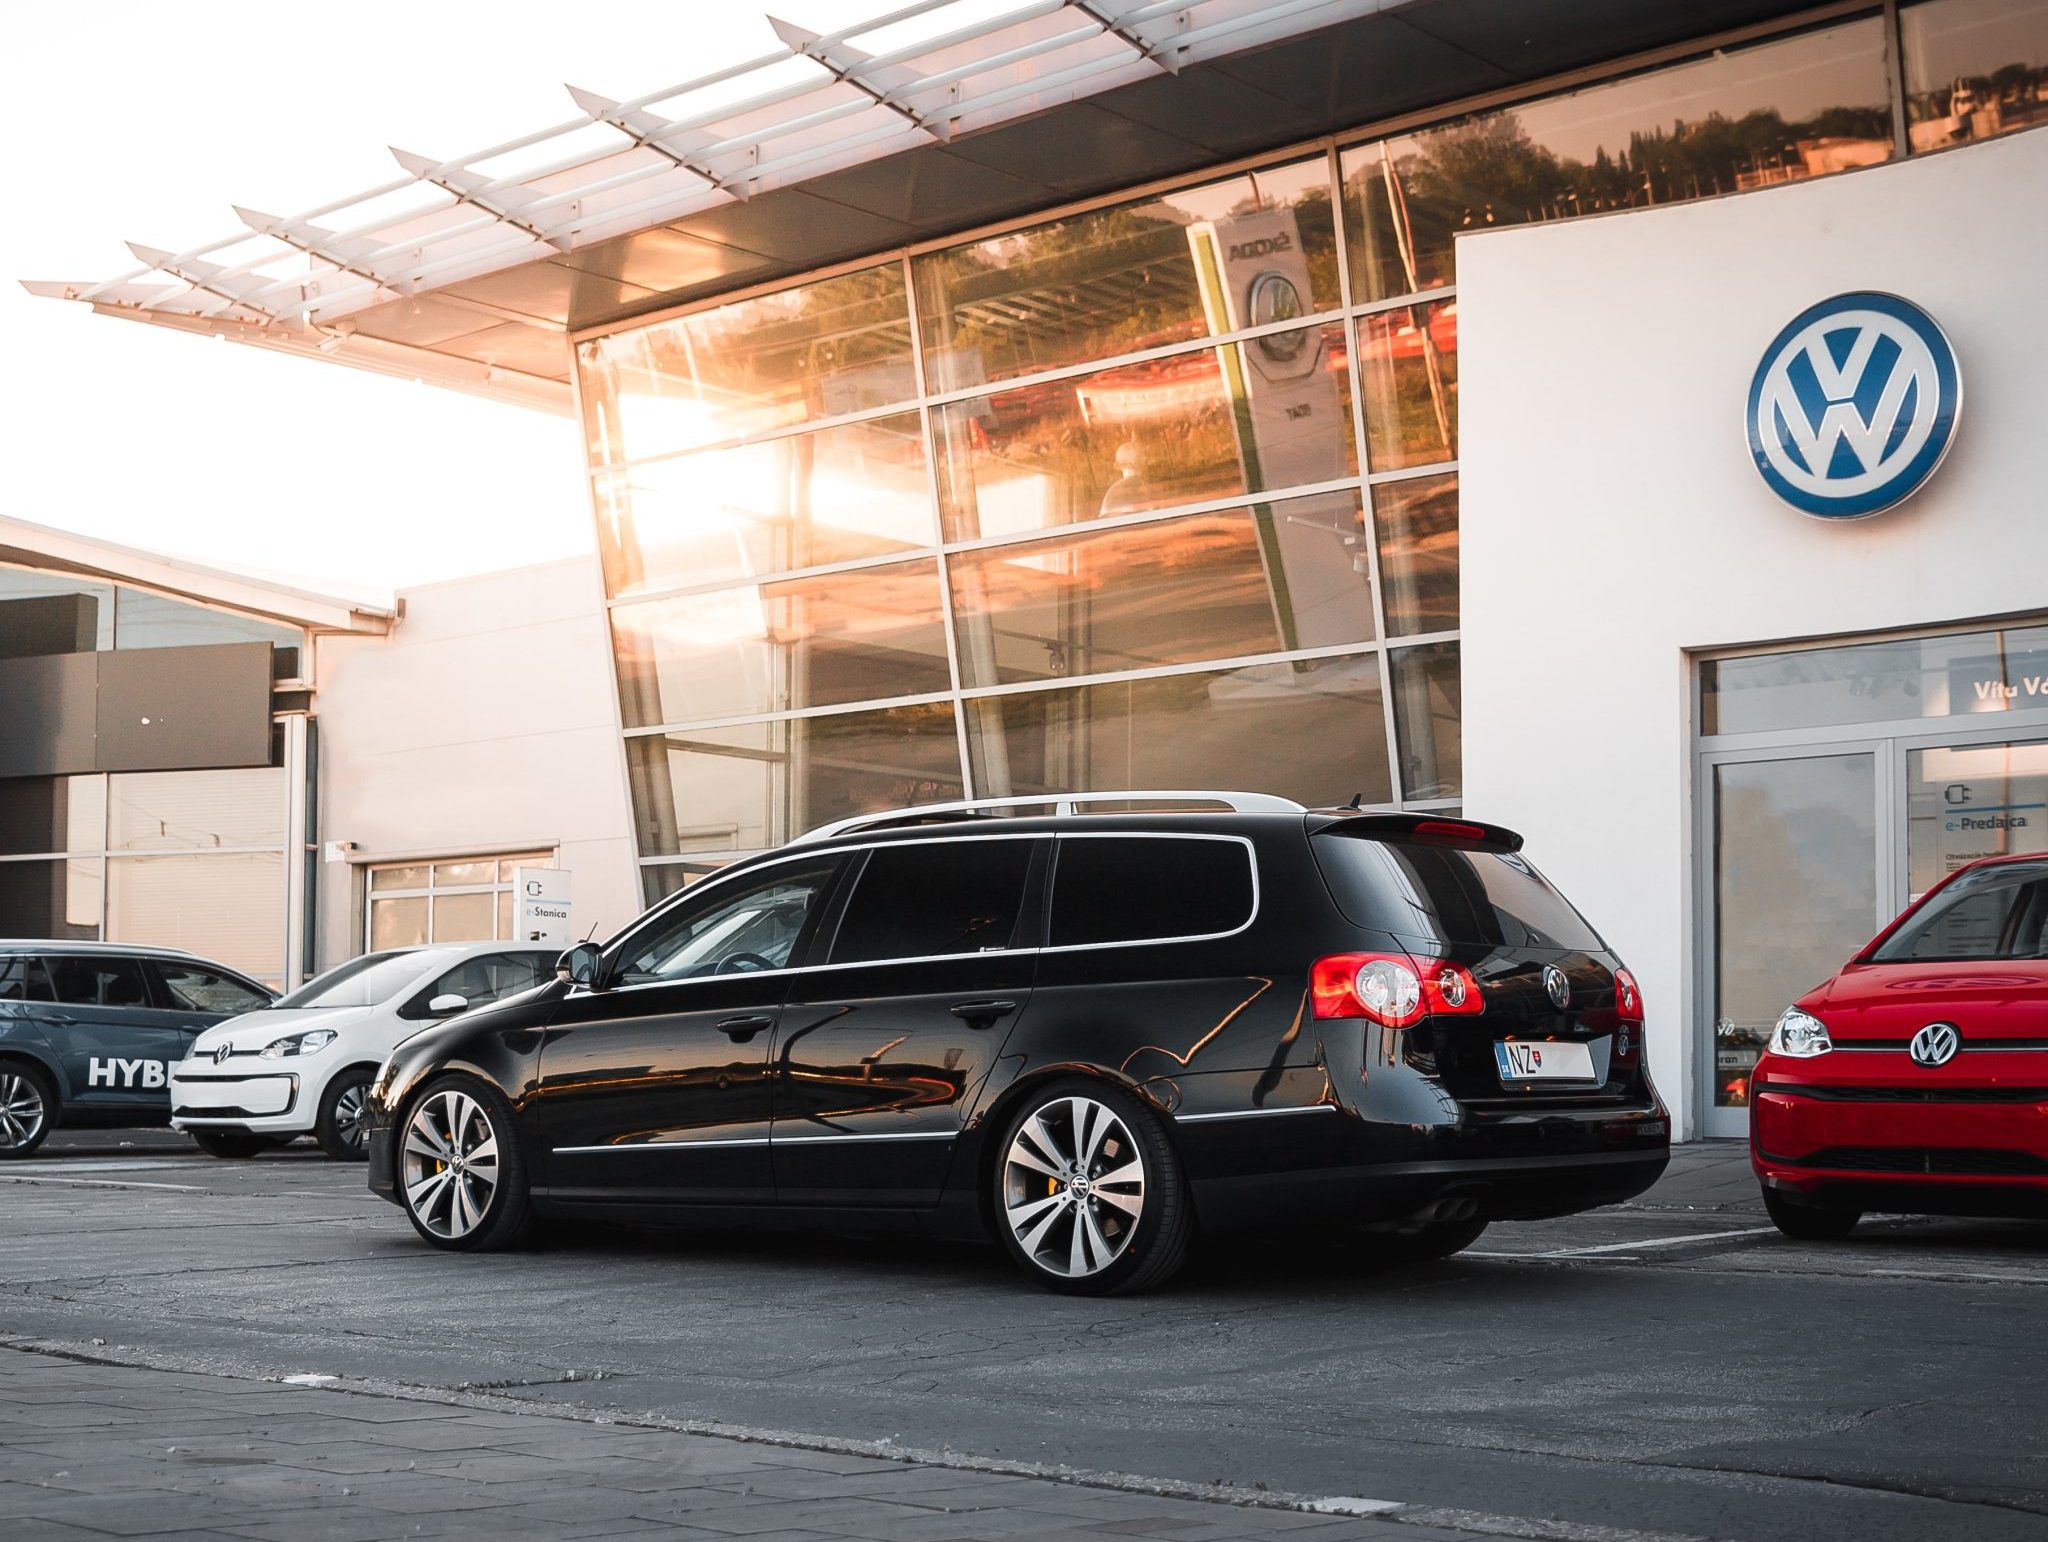 VW Passat at Dealership